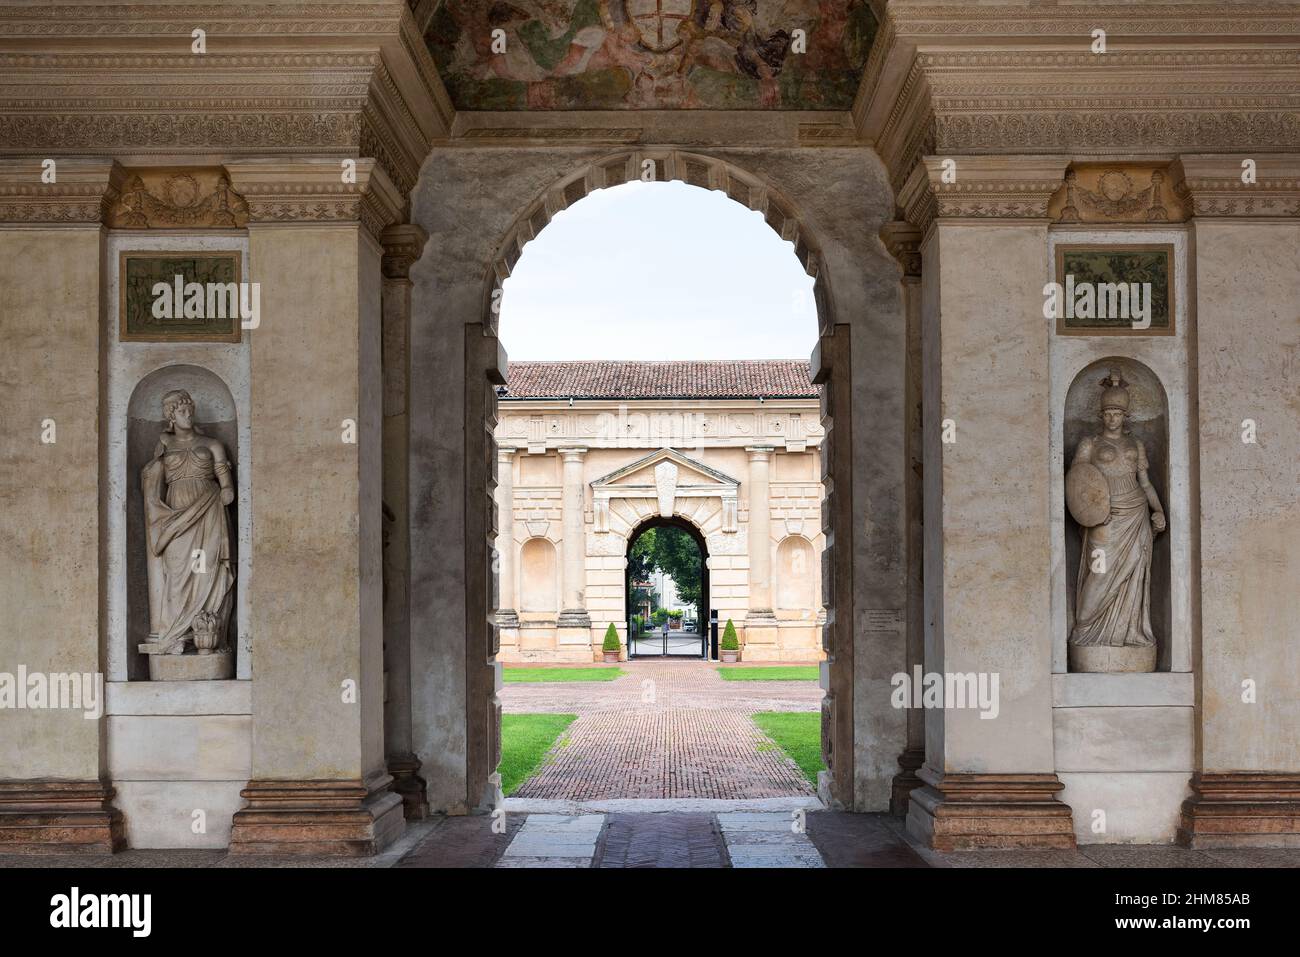 Mantua, Italy: Italian classic architecture at Palazzo Te. Stock Photo